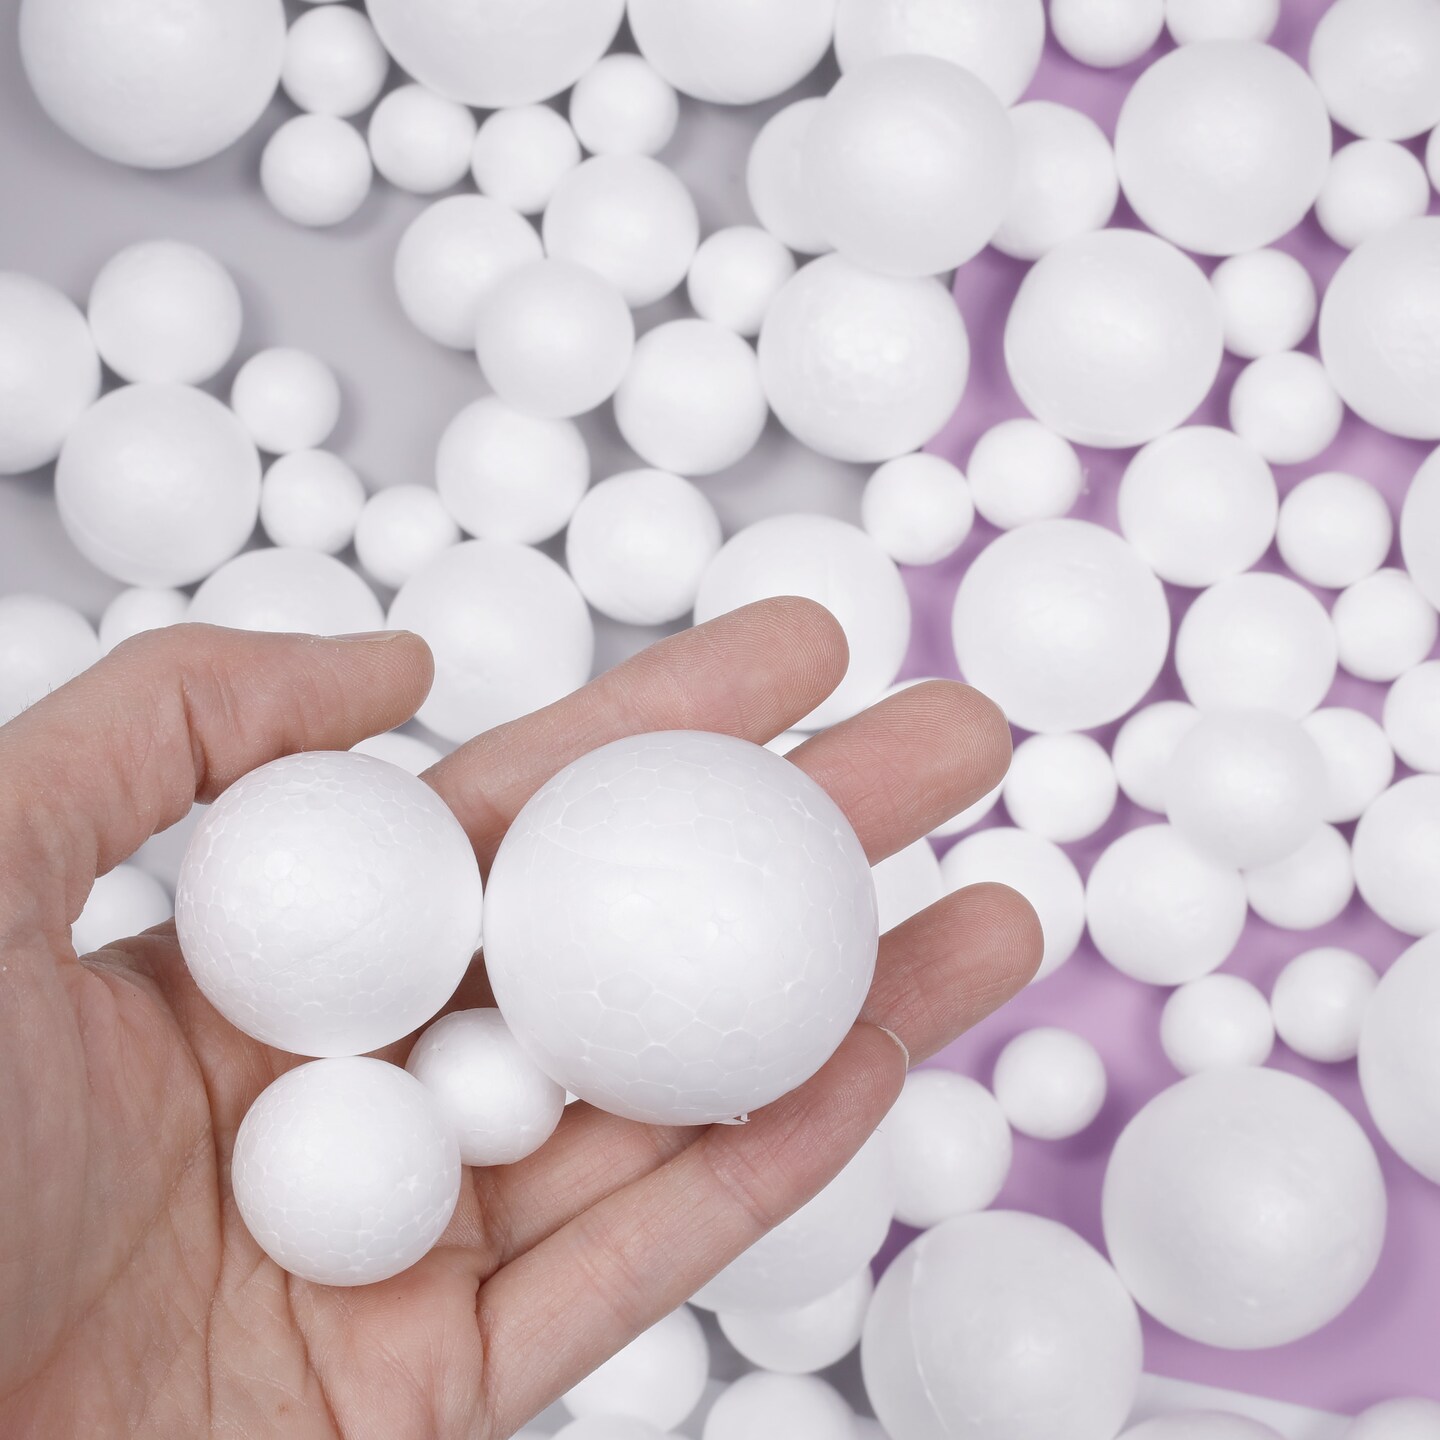 8000pcs 2-4mm / 1000pcs 5-10mm Foam Balls Craft Bubble Ball Gift